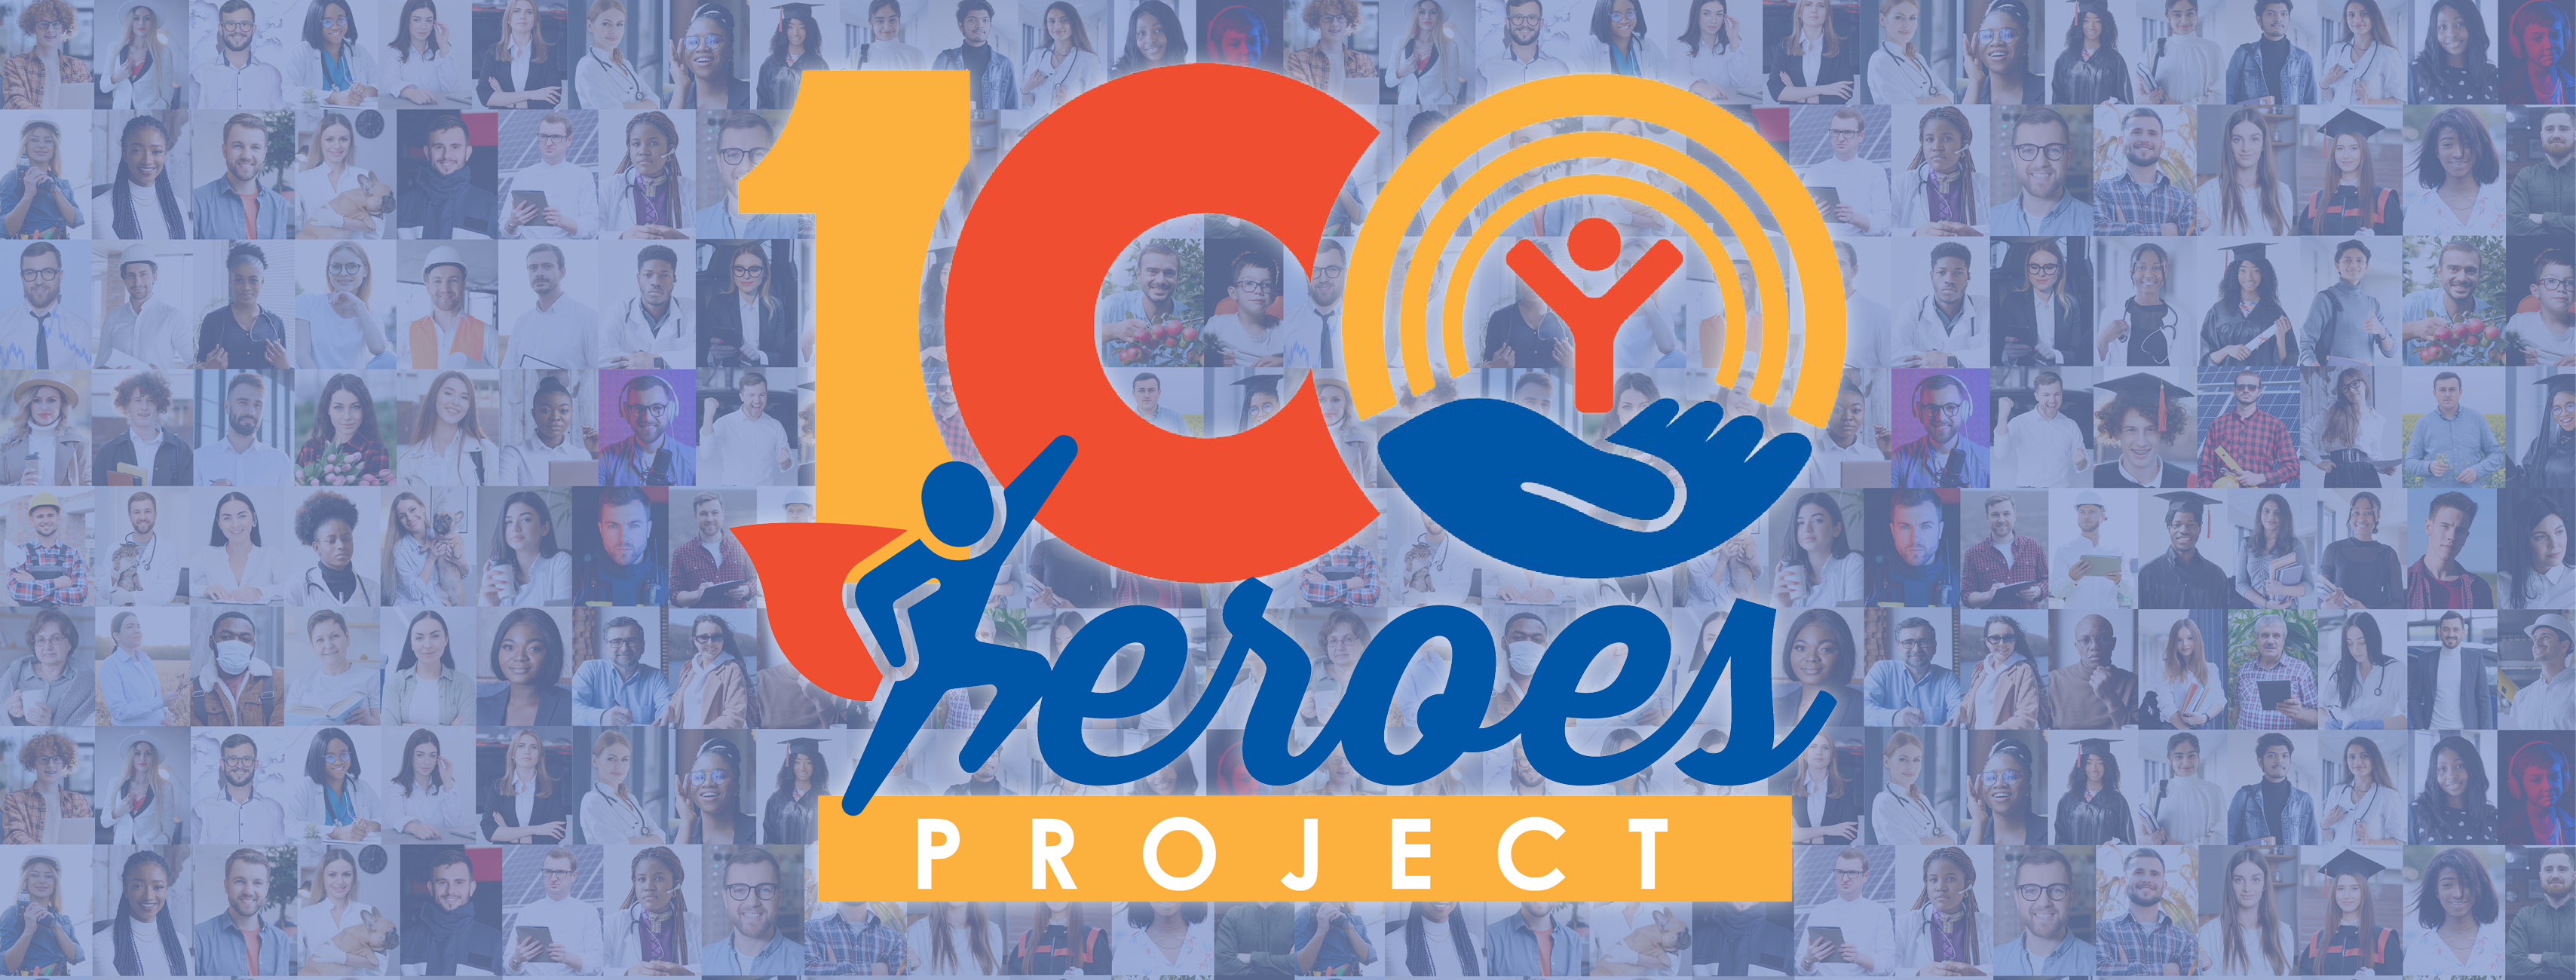 100-Heroes-Banner